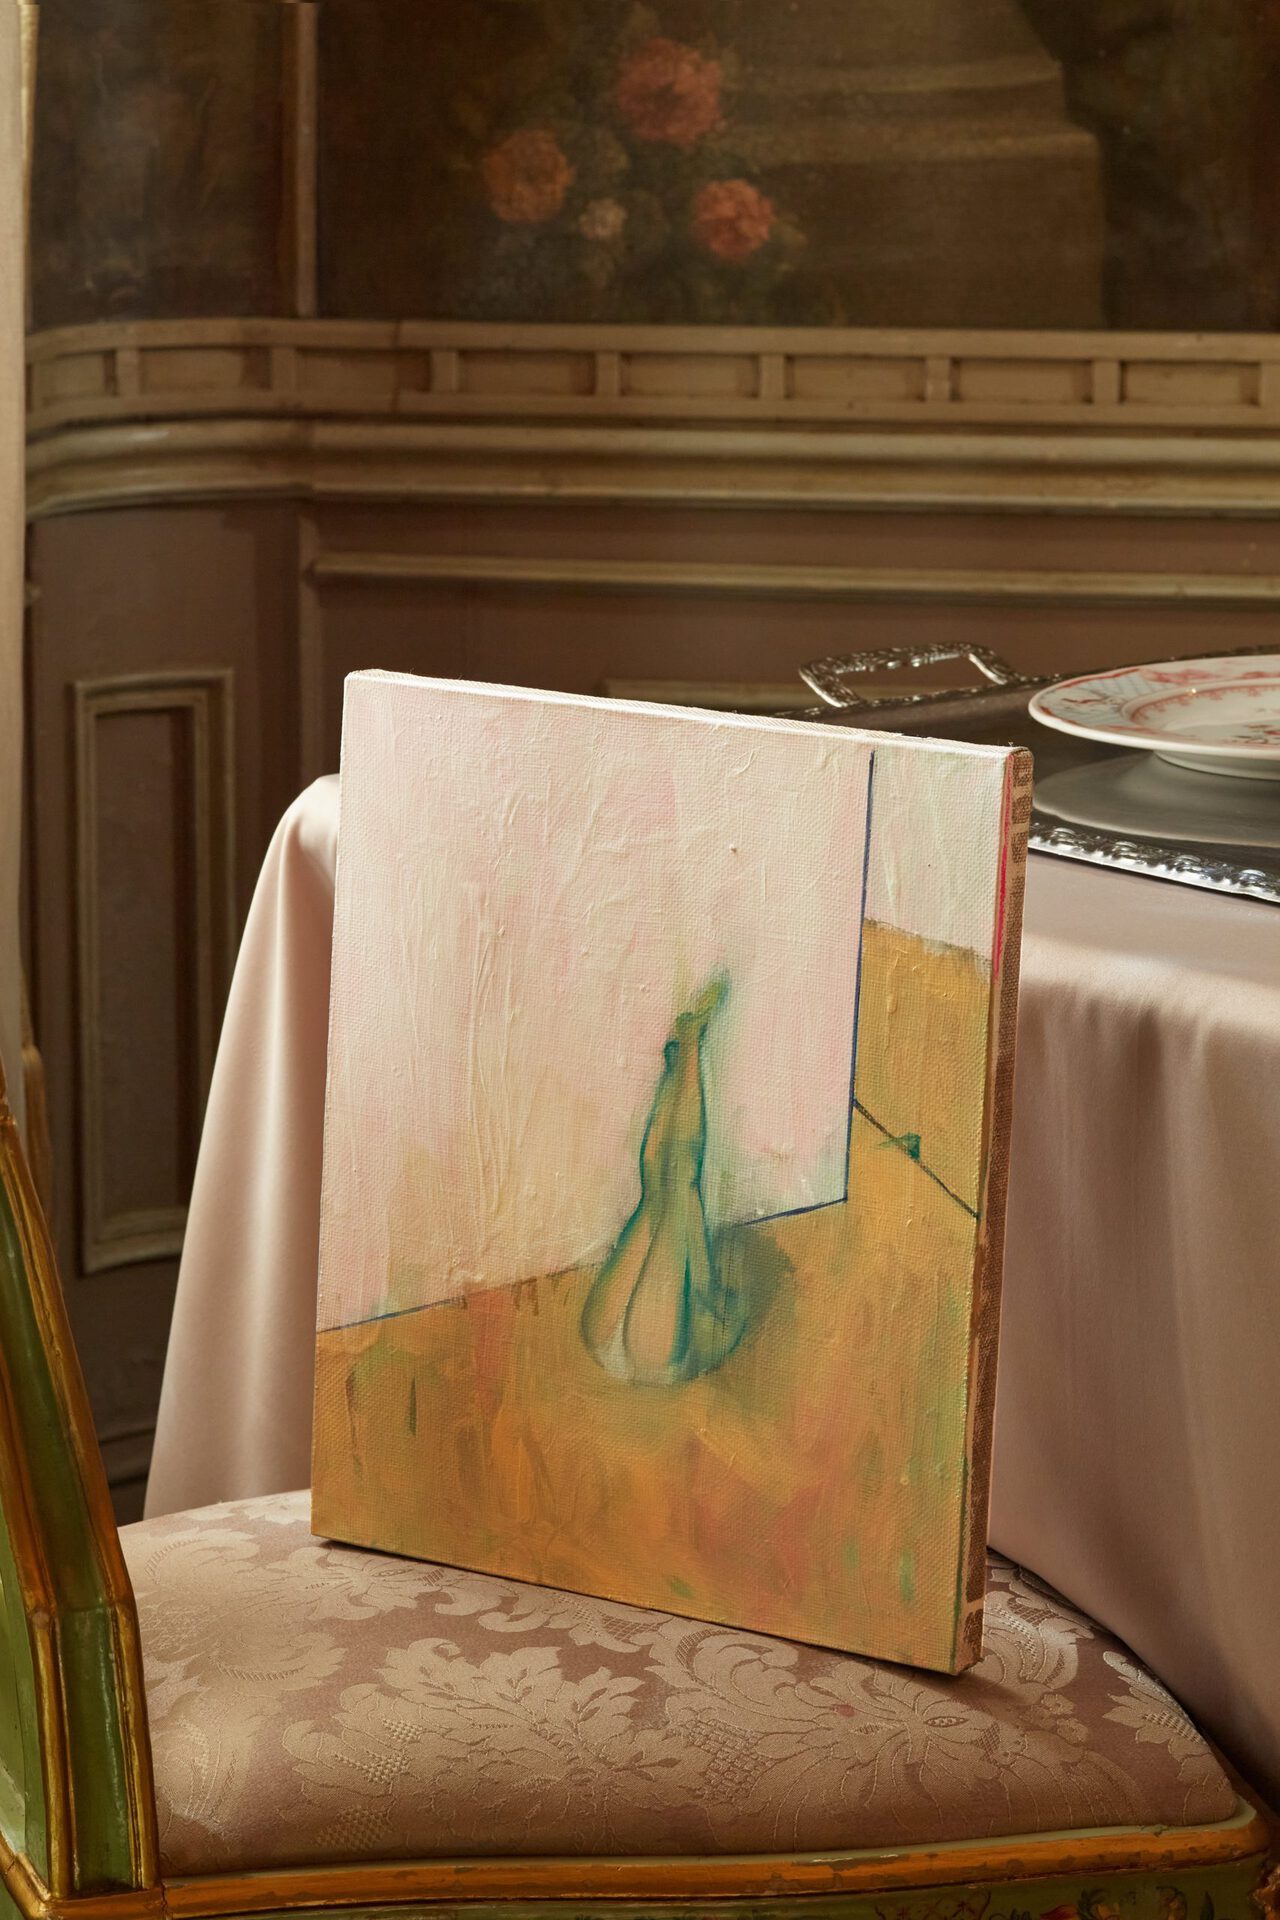 Katya Tzareva “In the room #2”; oil on canvas, 30 x 35 cm, 2021